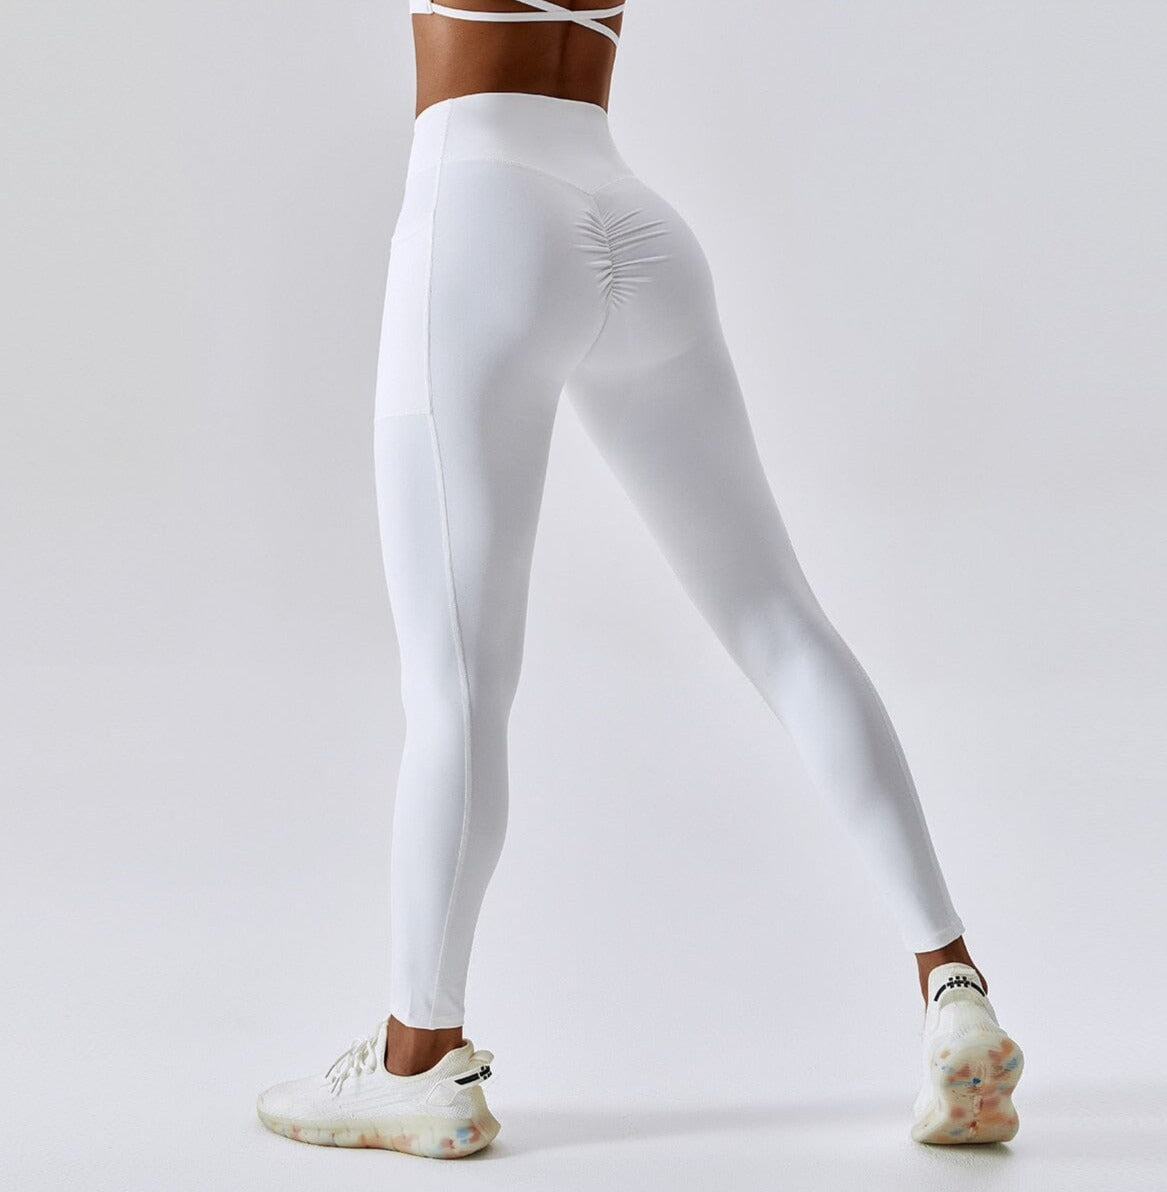 Leggings - Crossfit - Fitness - Running - Yoga Pants - Gym – BEST WEAR -  See Through Shirts - Sheer Nylon Tops - Second Skin - Transparent Pantyhose  - Tights - Plus Size - Women Men